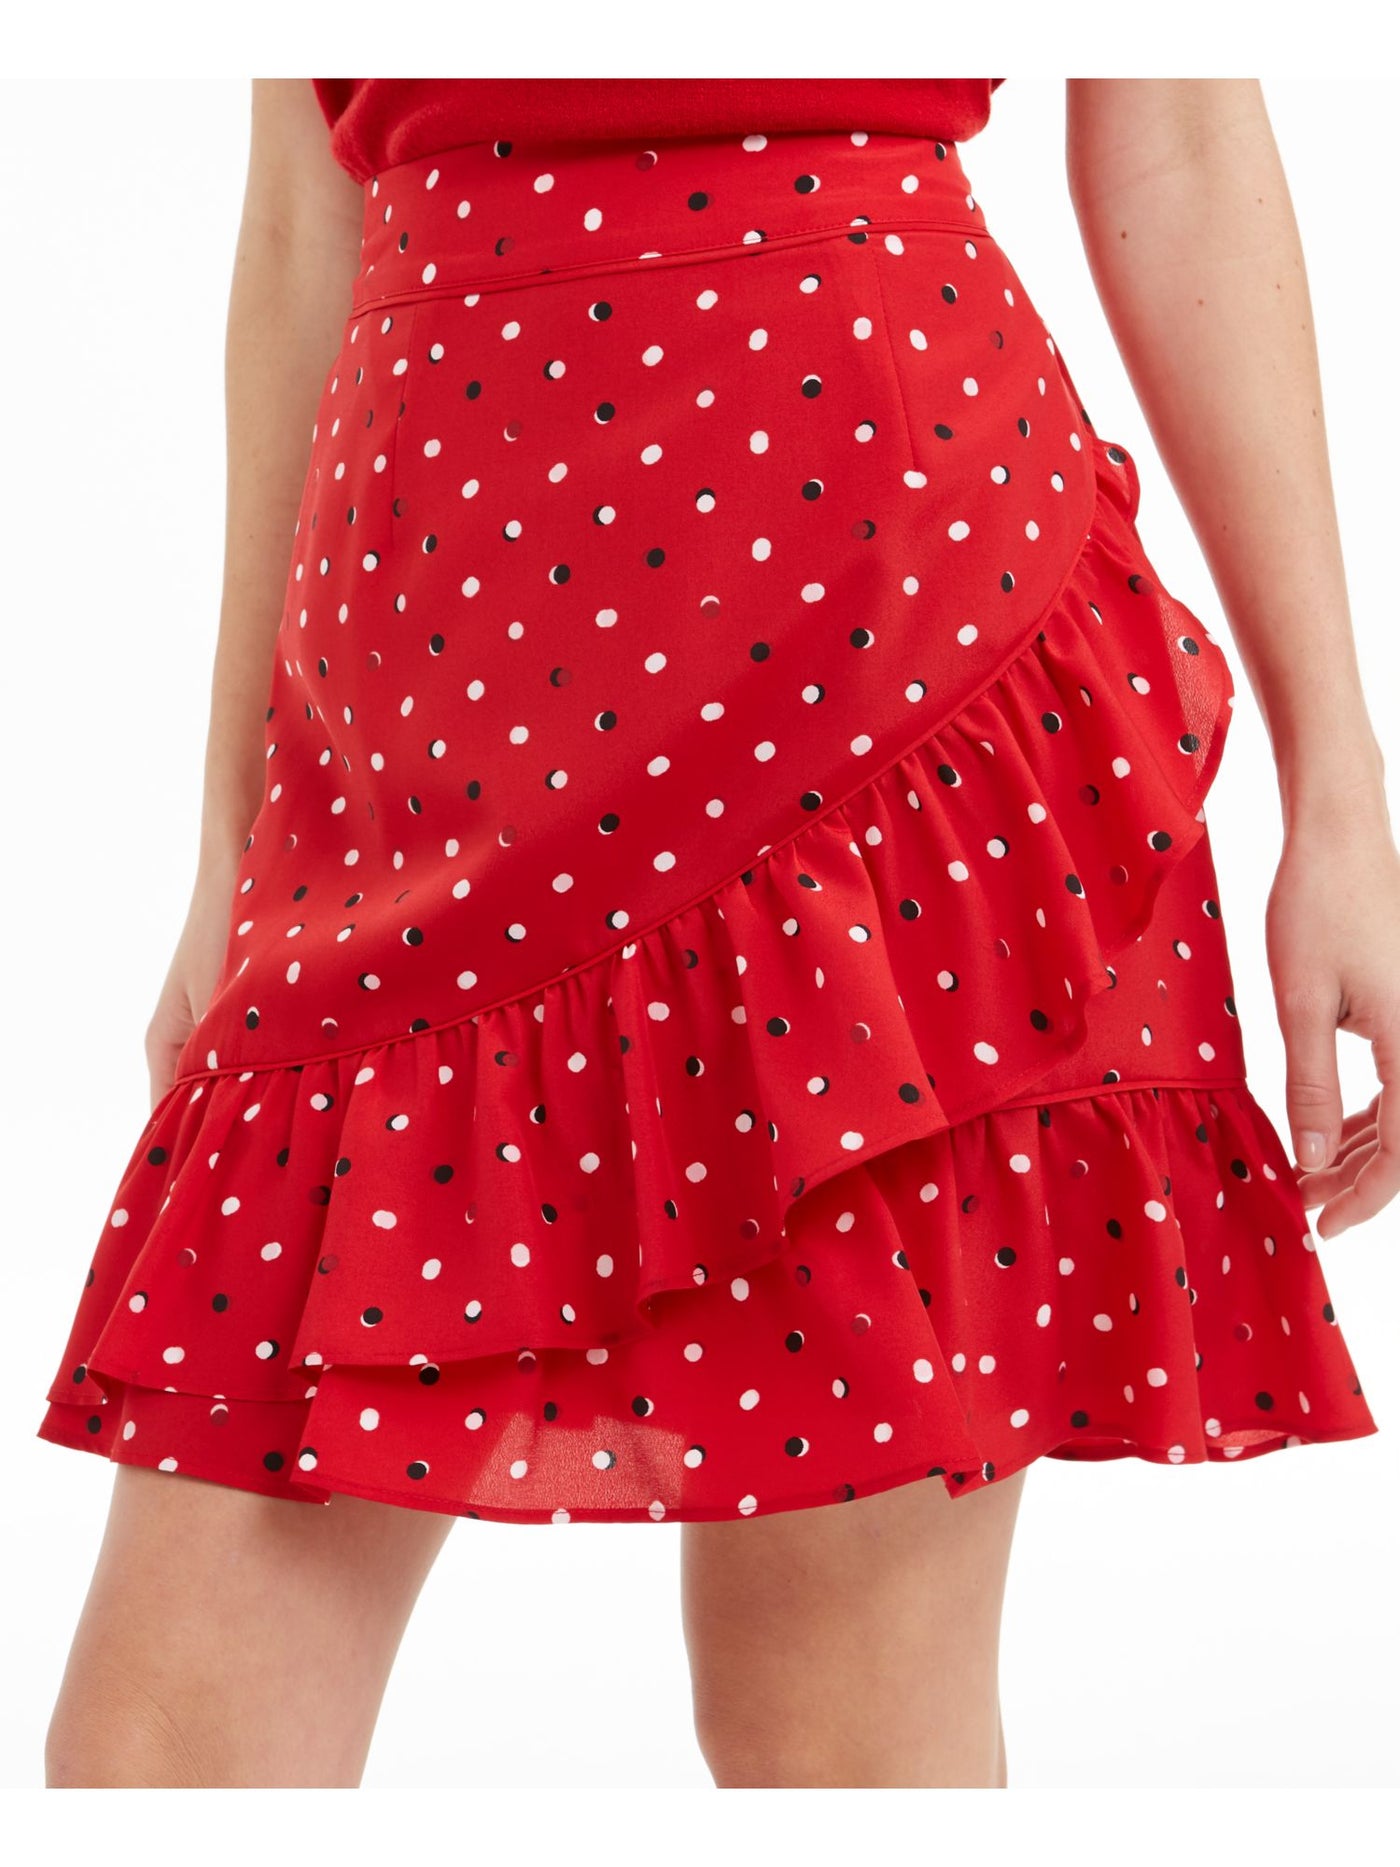 MAISON JULES Womens Red Ruffled Polka Dot Short Ruffled Skirt Juniors M